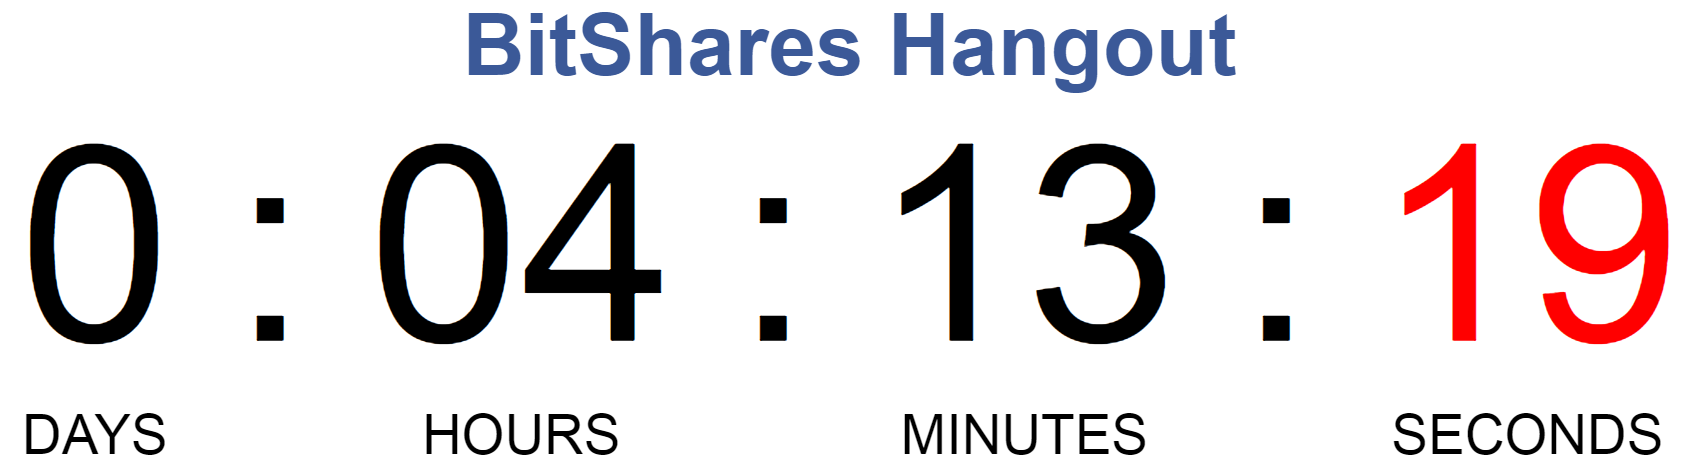 2017-12-09 09_46_38-BitShares Hangout - Countdown.png